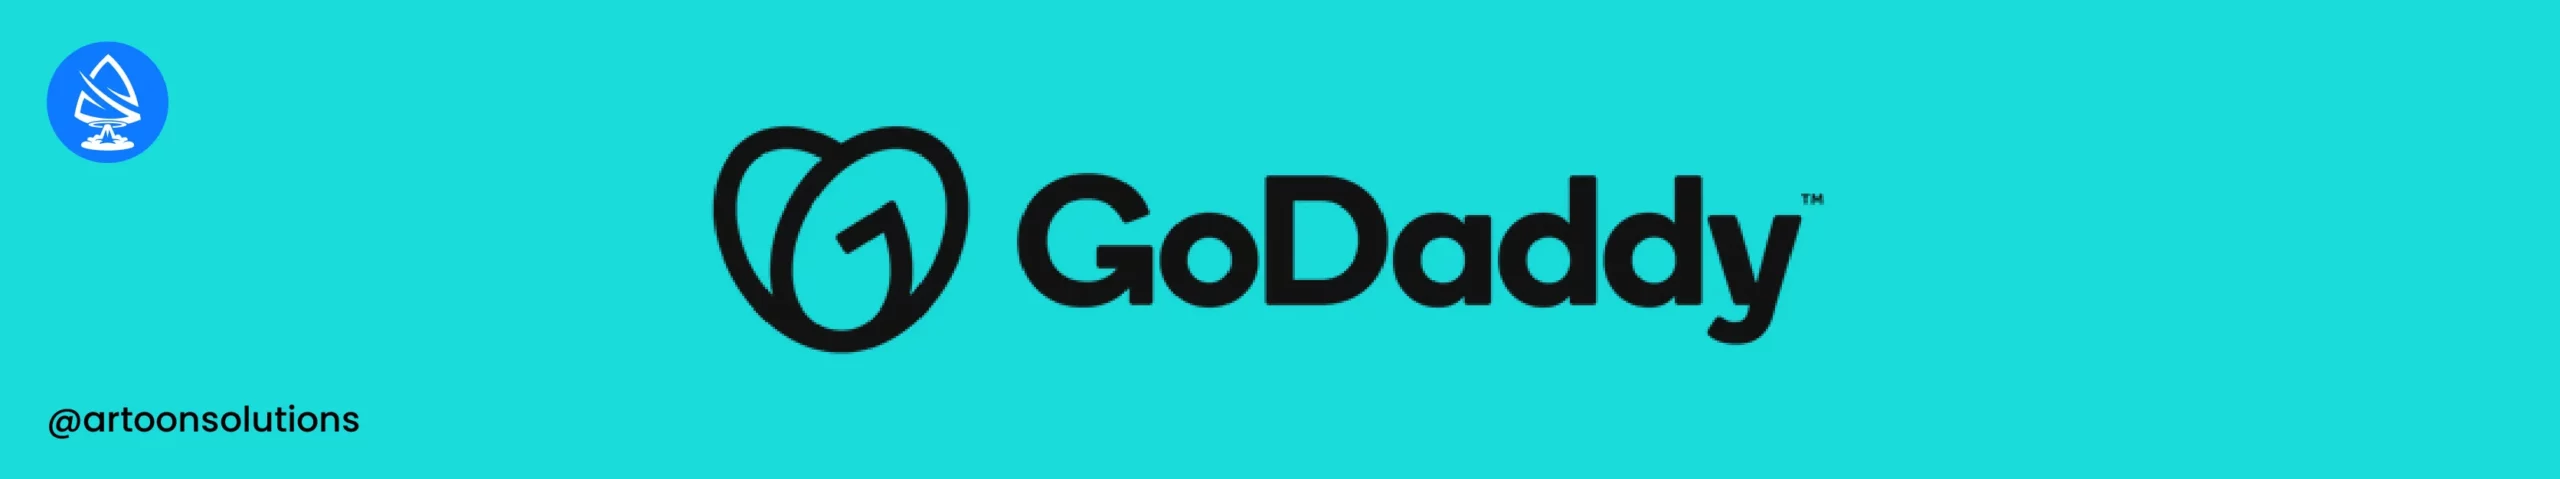 GoDaddy Website Builder: Your Easy Solution for Professional Websites